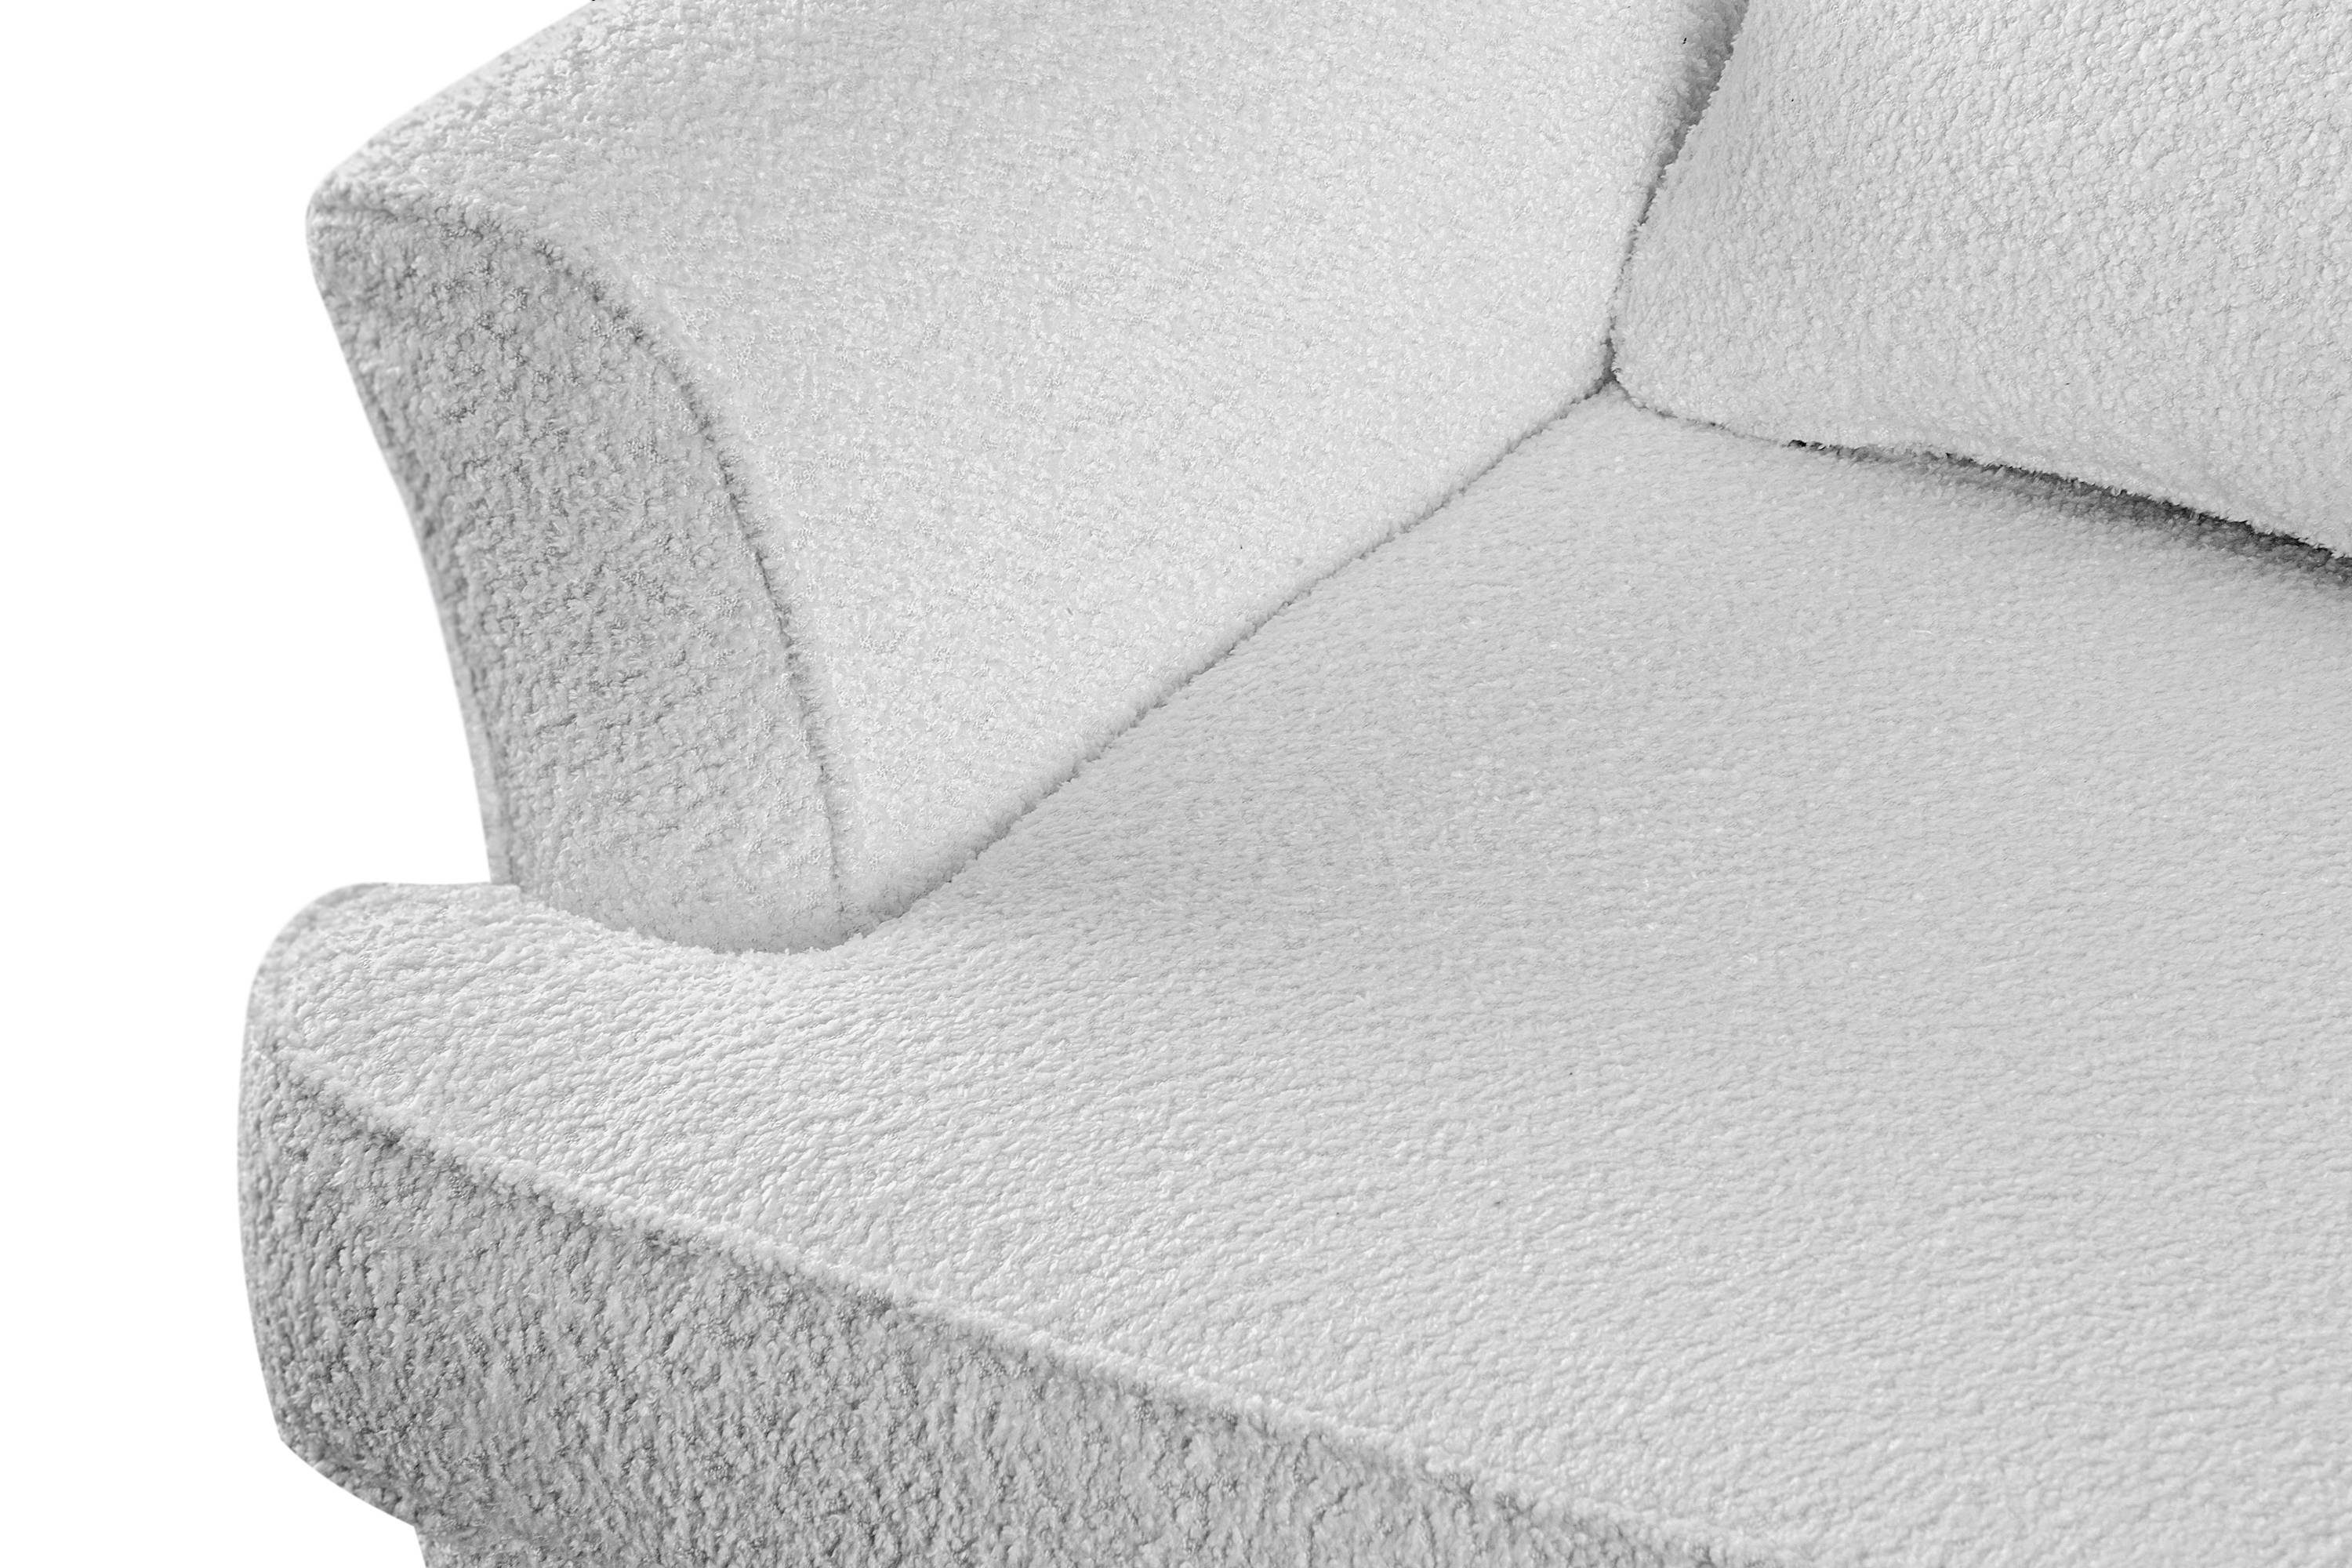 Hocker, STRALIS zeitloses Sessel mit Kissen Konsimo Füße, Ohrensessel dekorativem hohe Design, inklusive